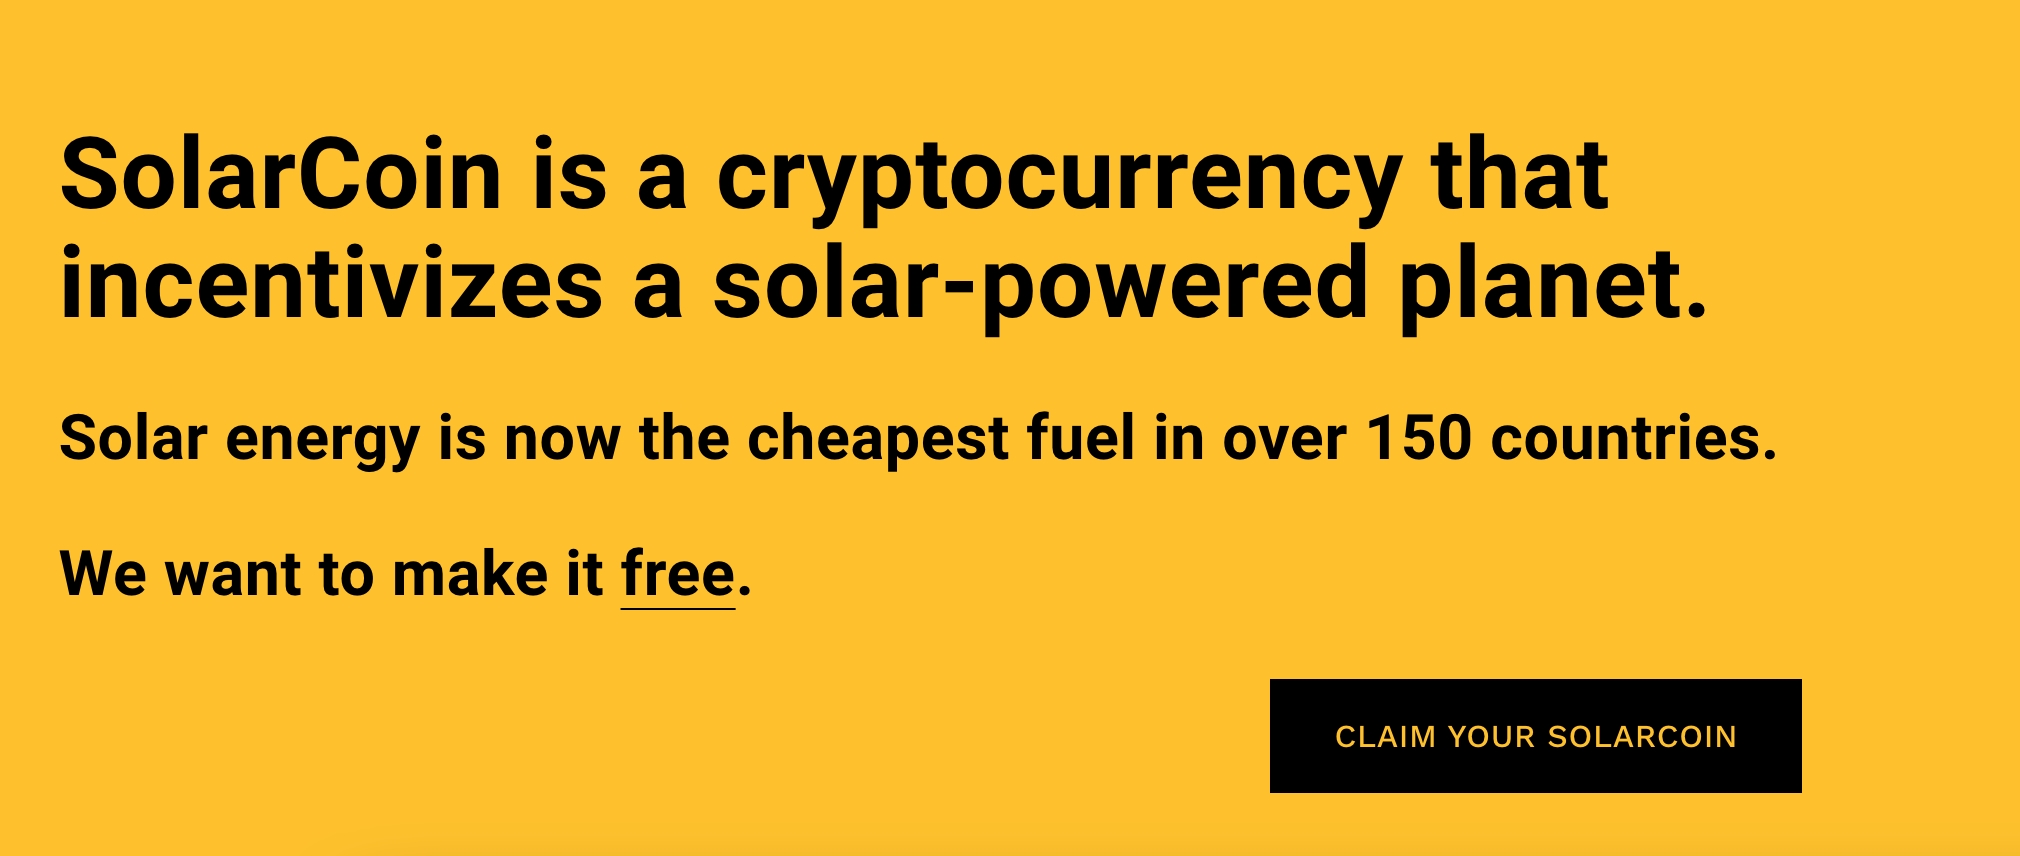 milieuvriendelijke cryptomunten SolarCoin